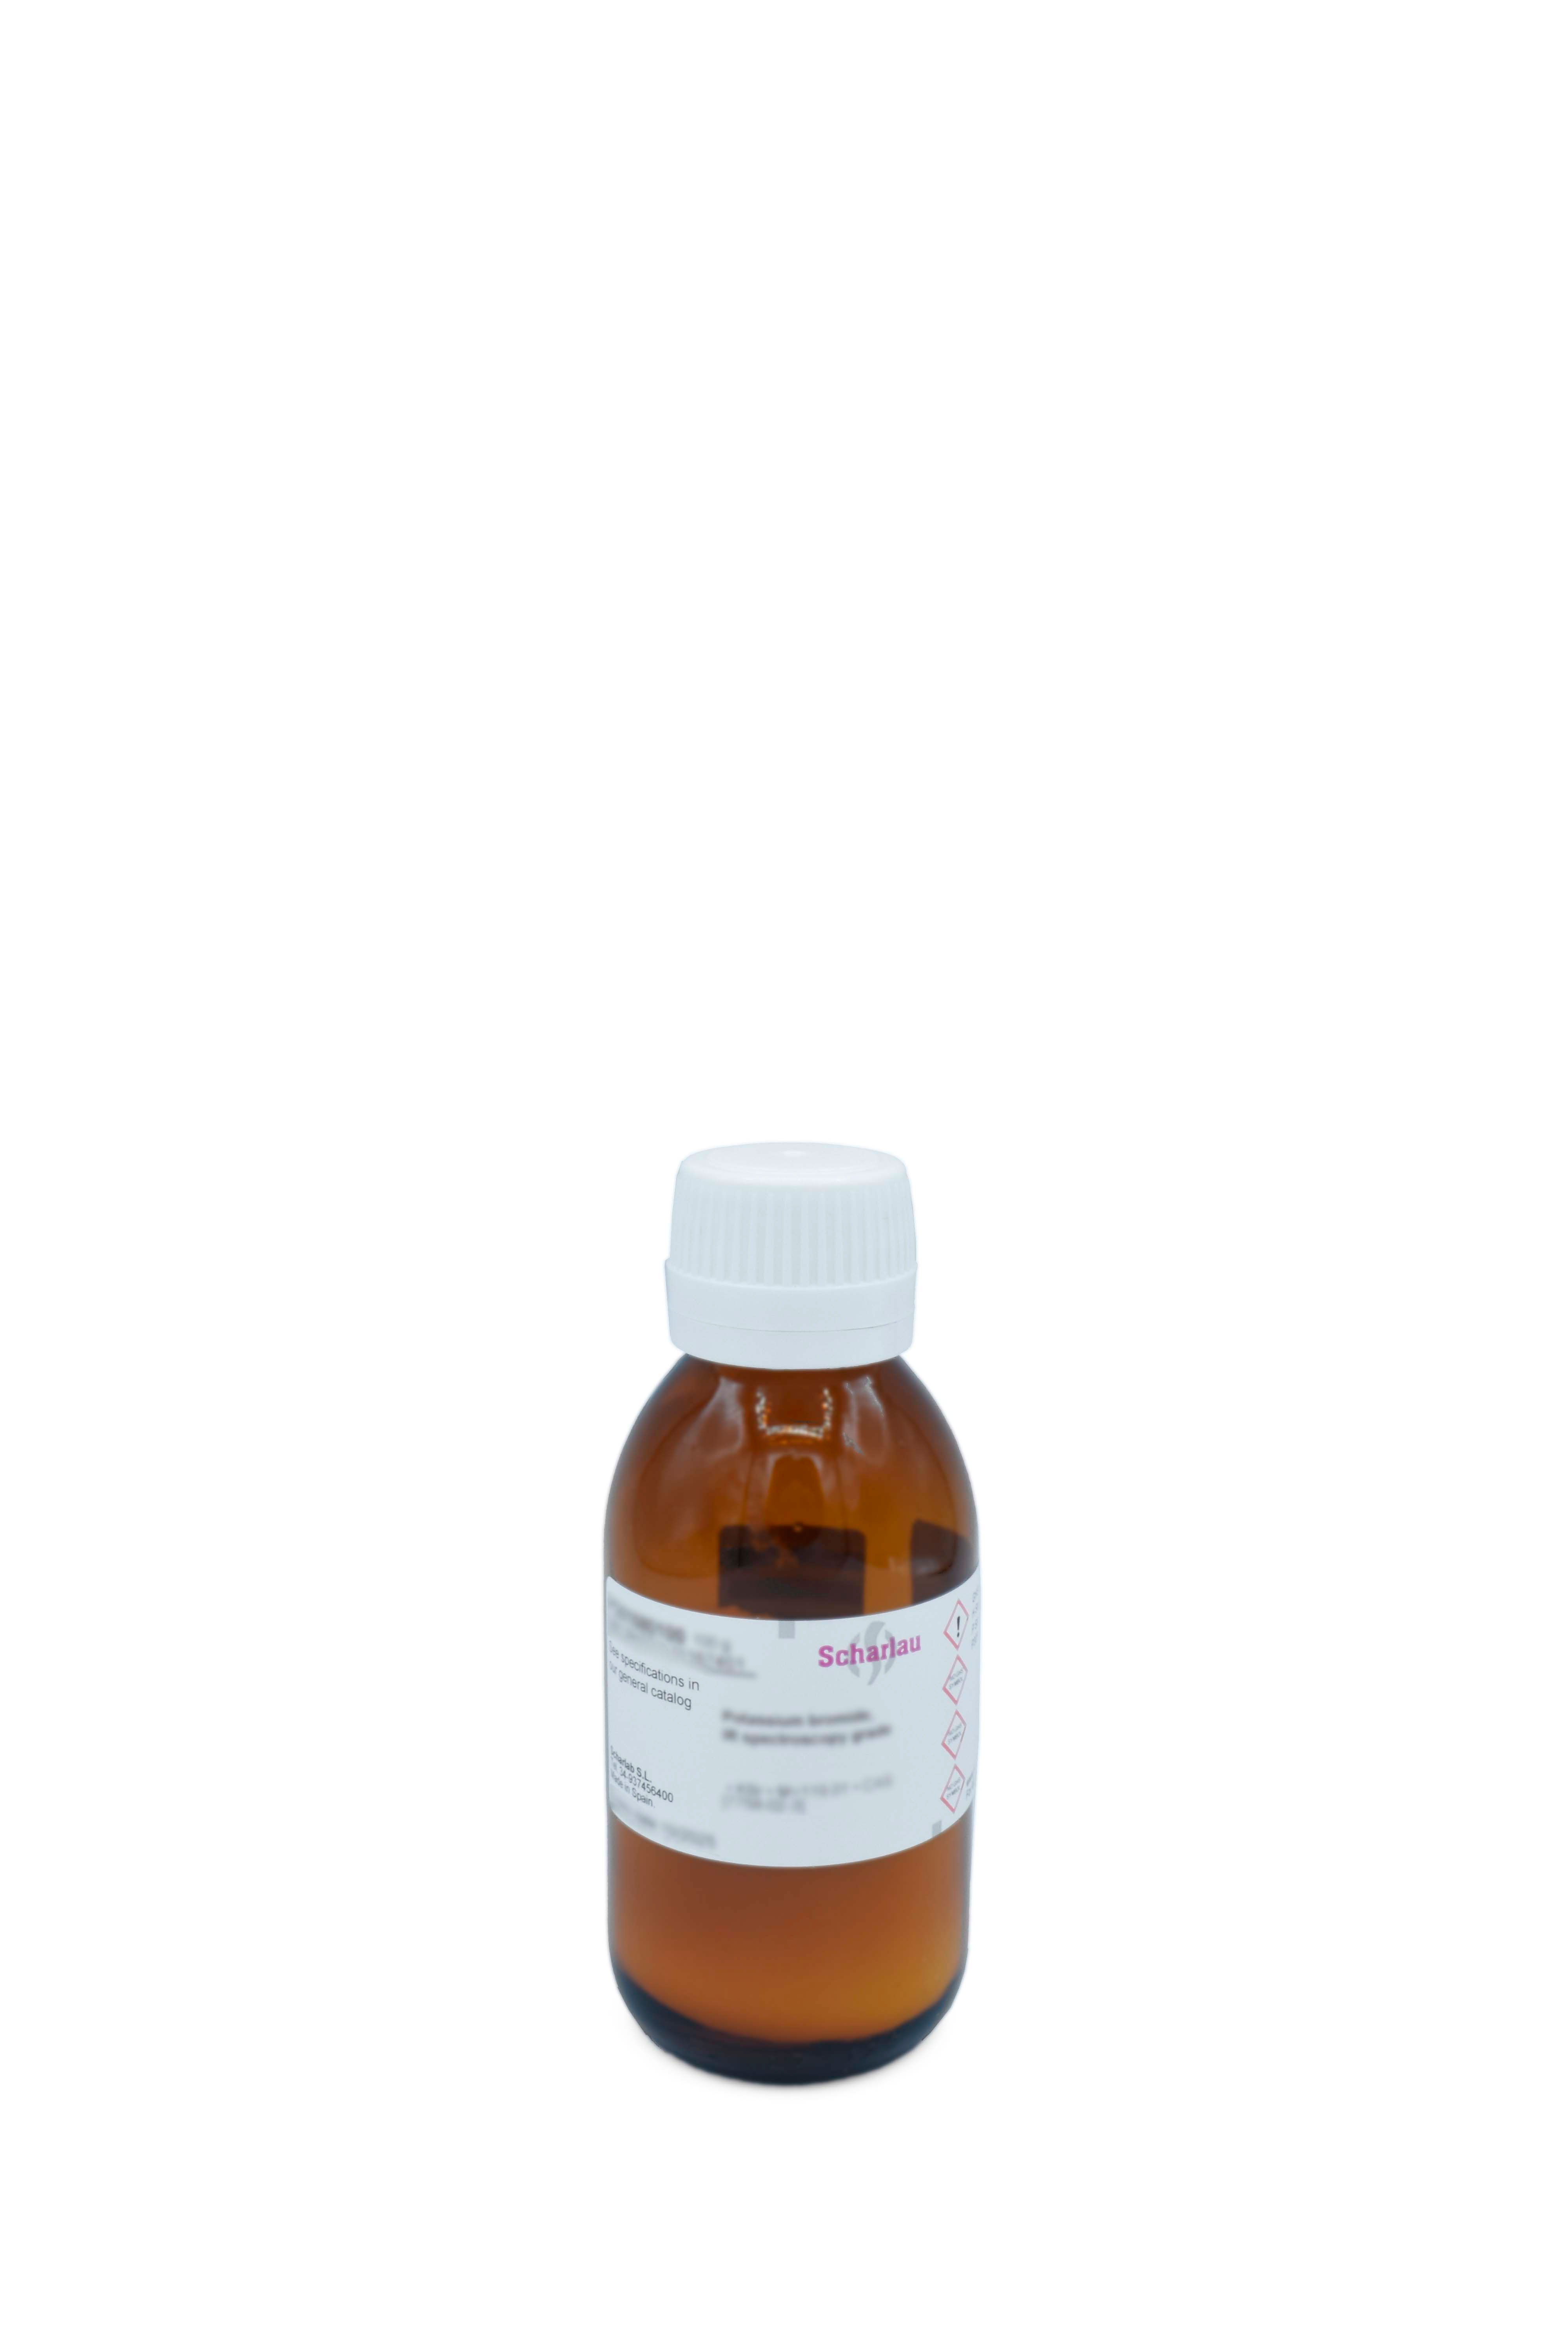 L-Arginina monoclorhidrato, Pharmpur®, Ph Eur, BP, USP